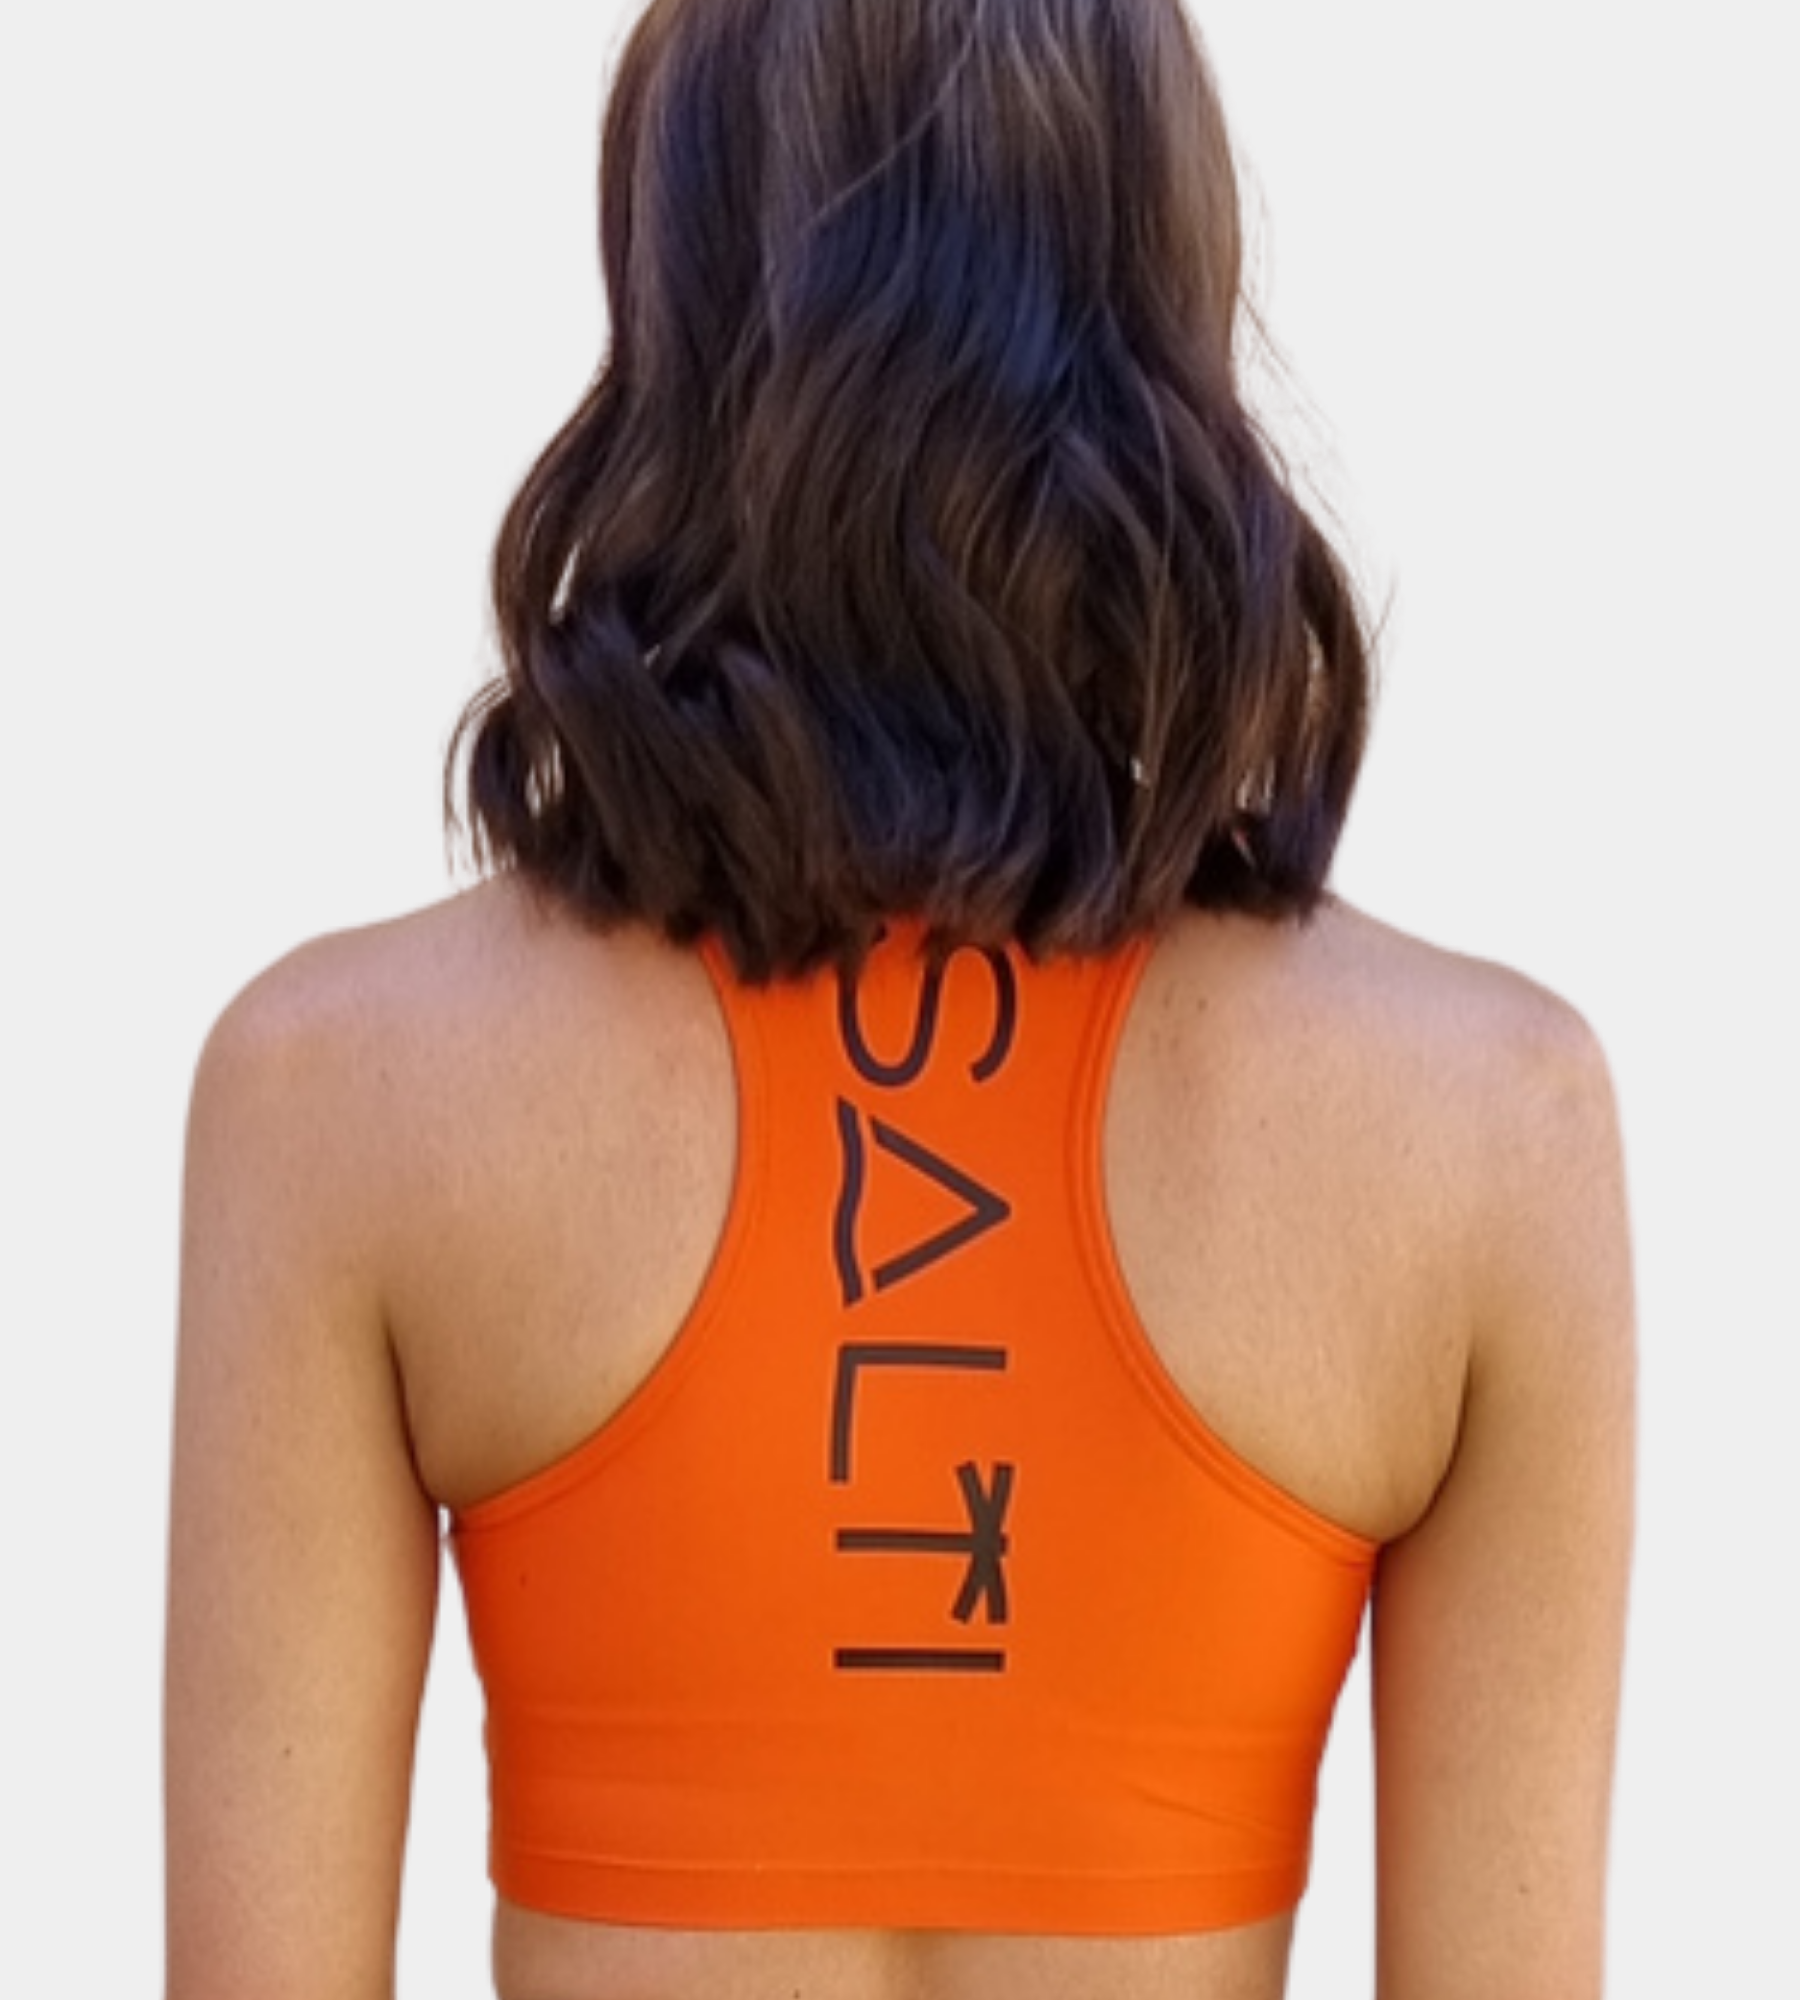 Sweat to swim sports Crop, Orange, Salti People activewear